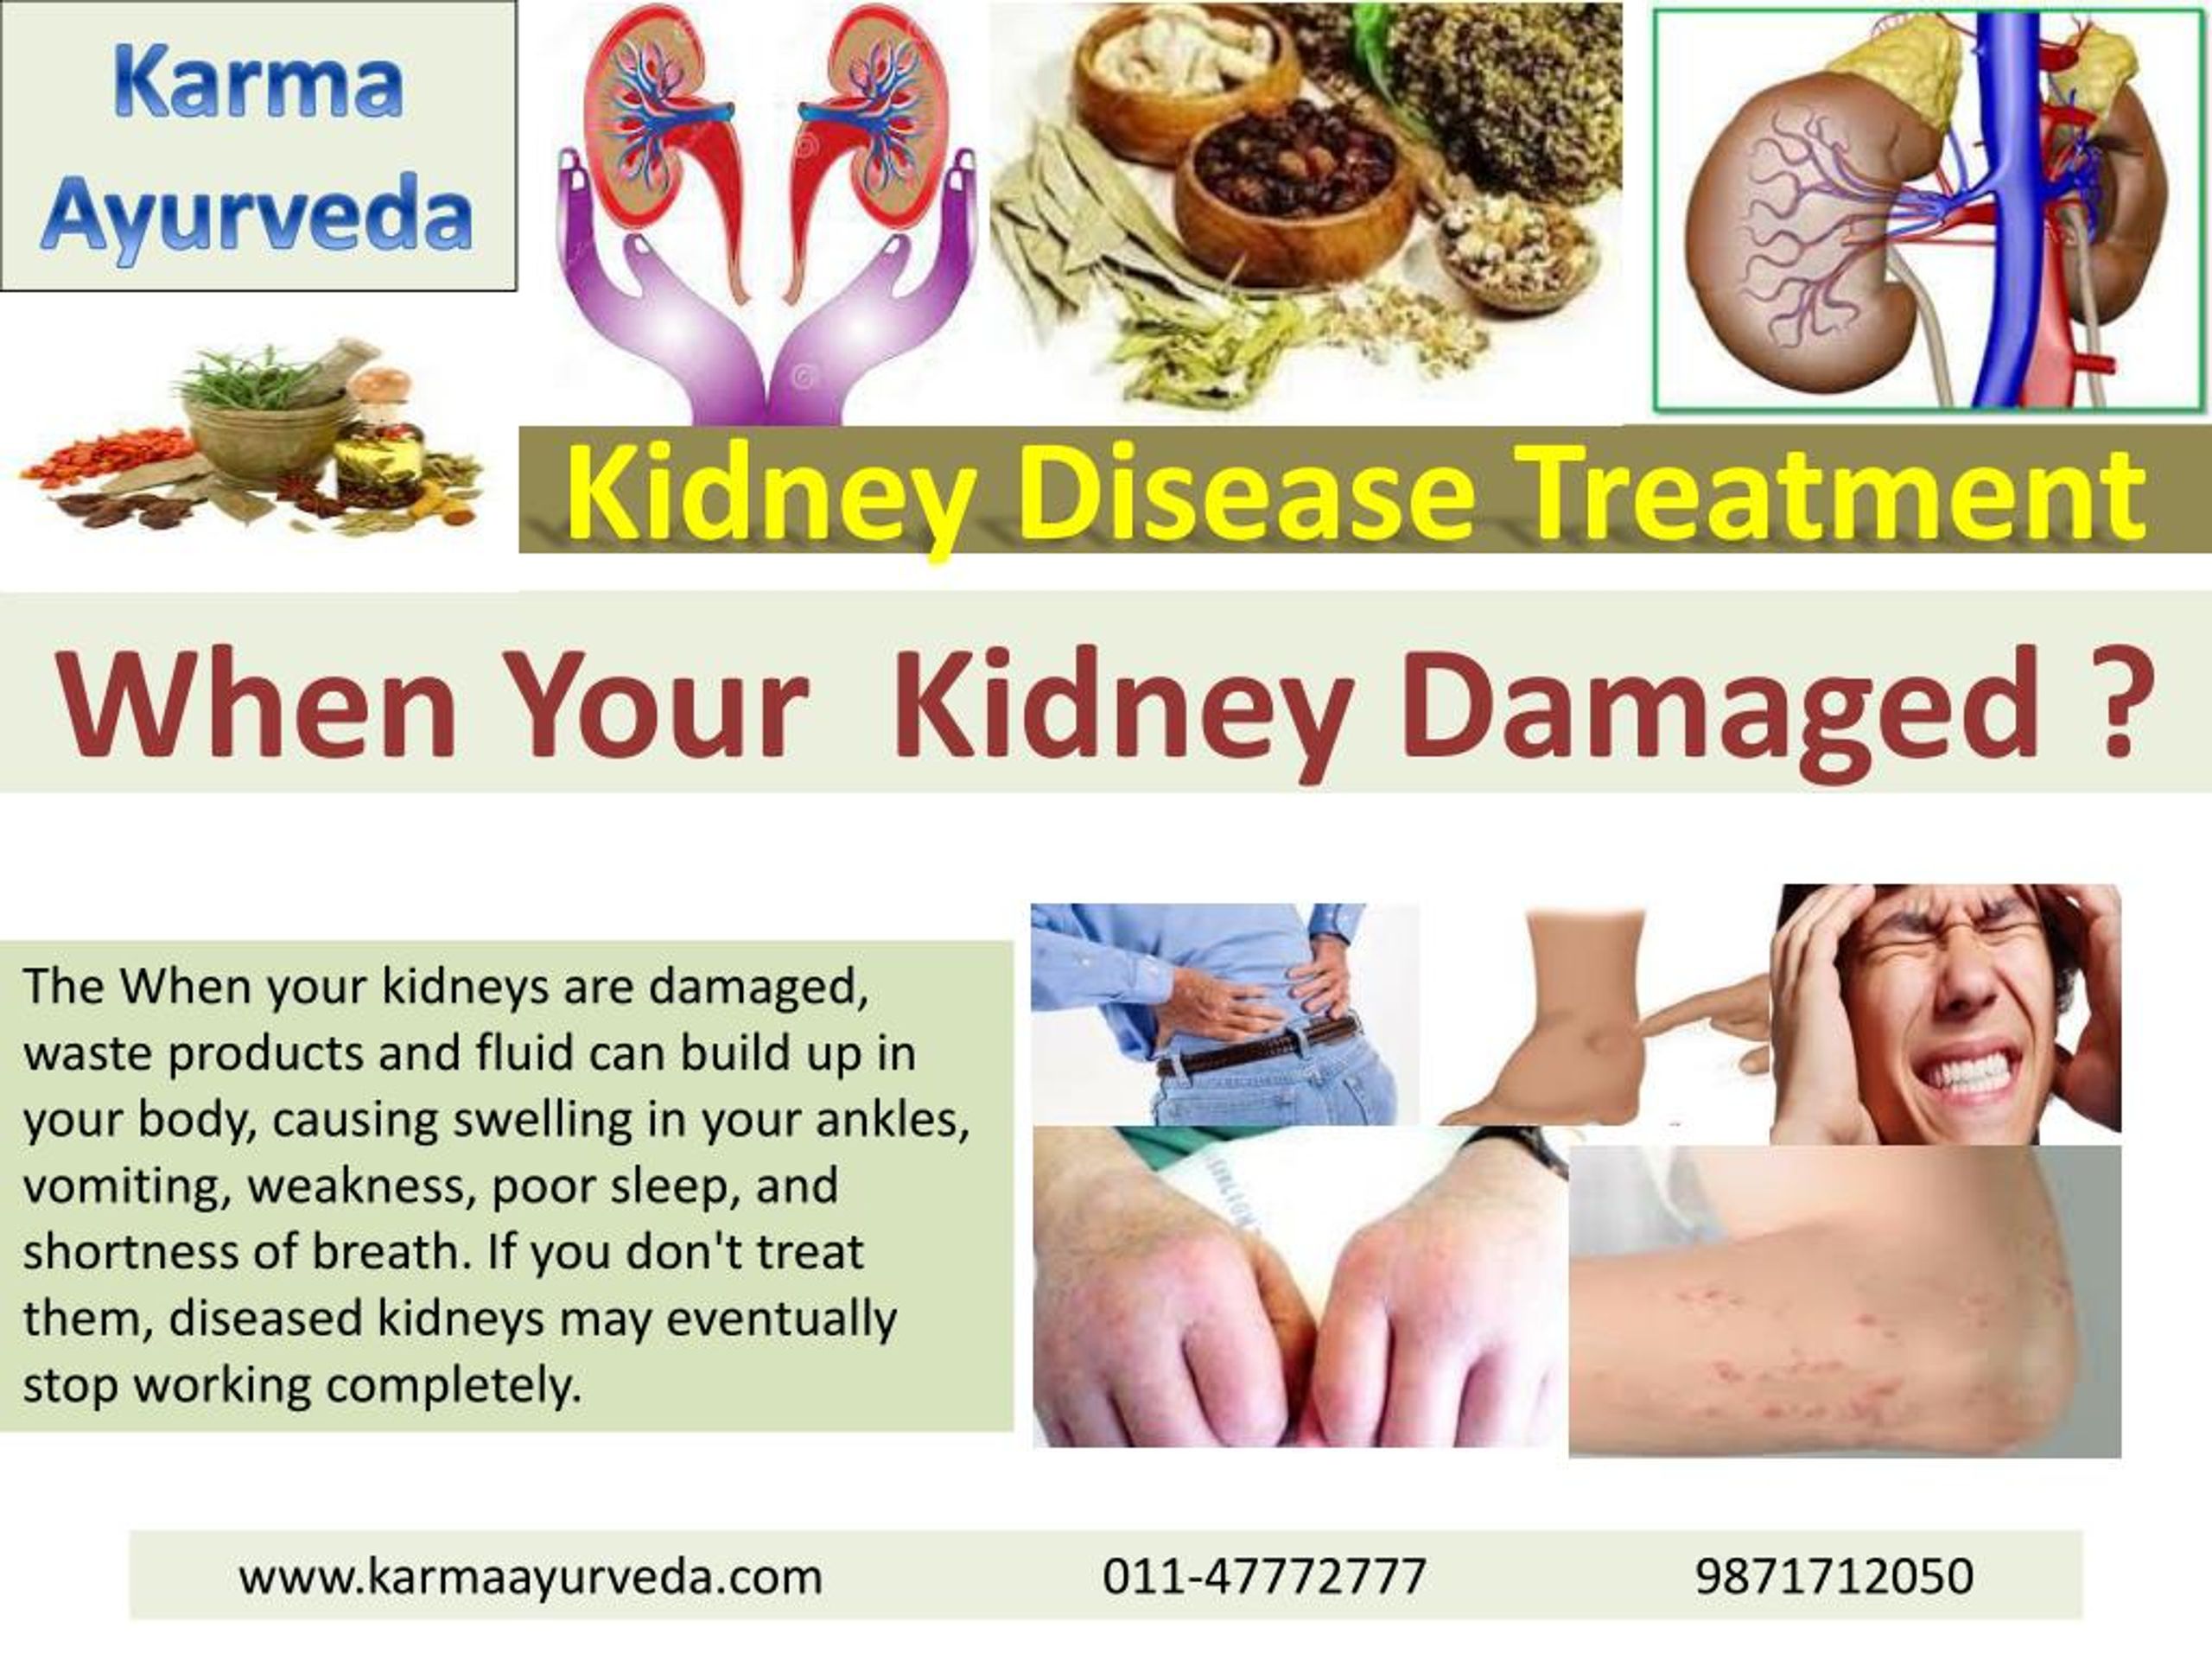 kidney disease treatment1.